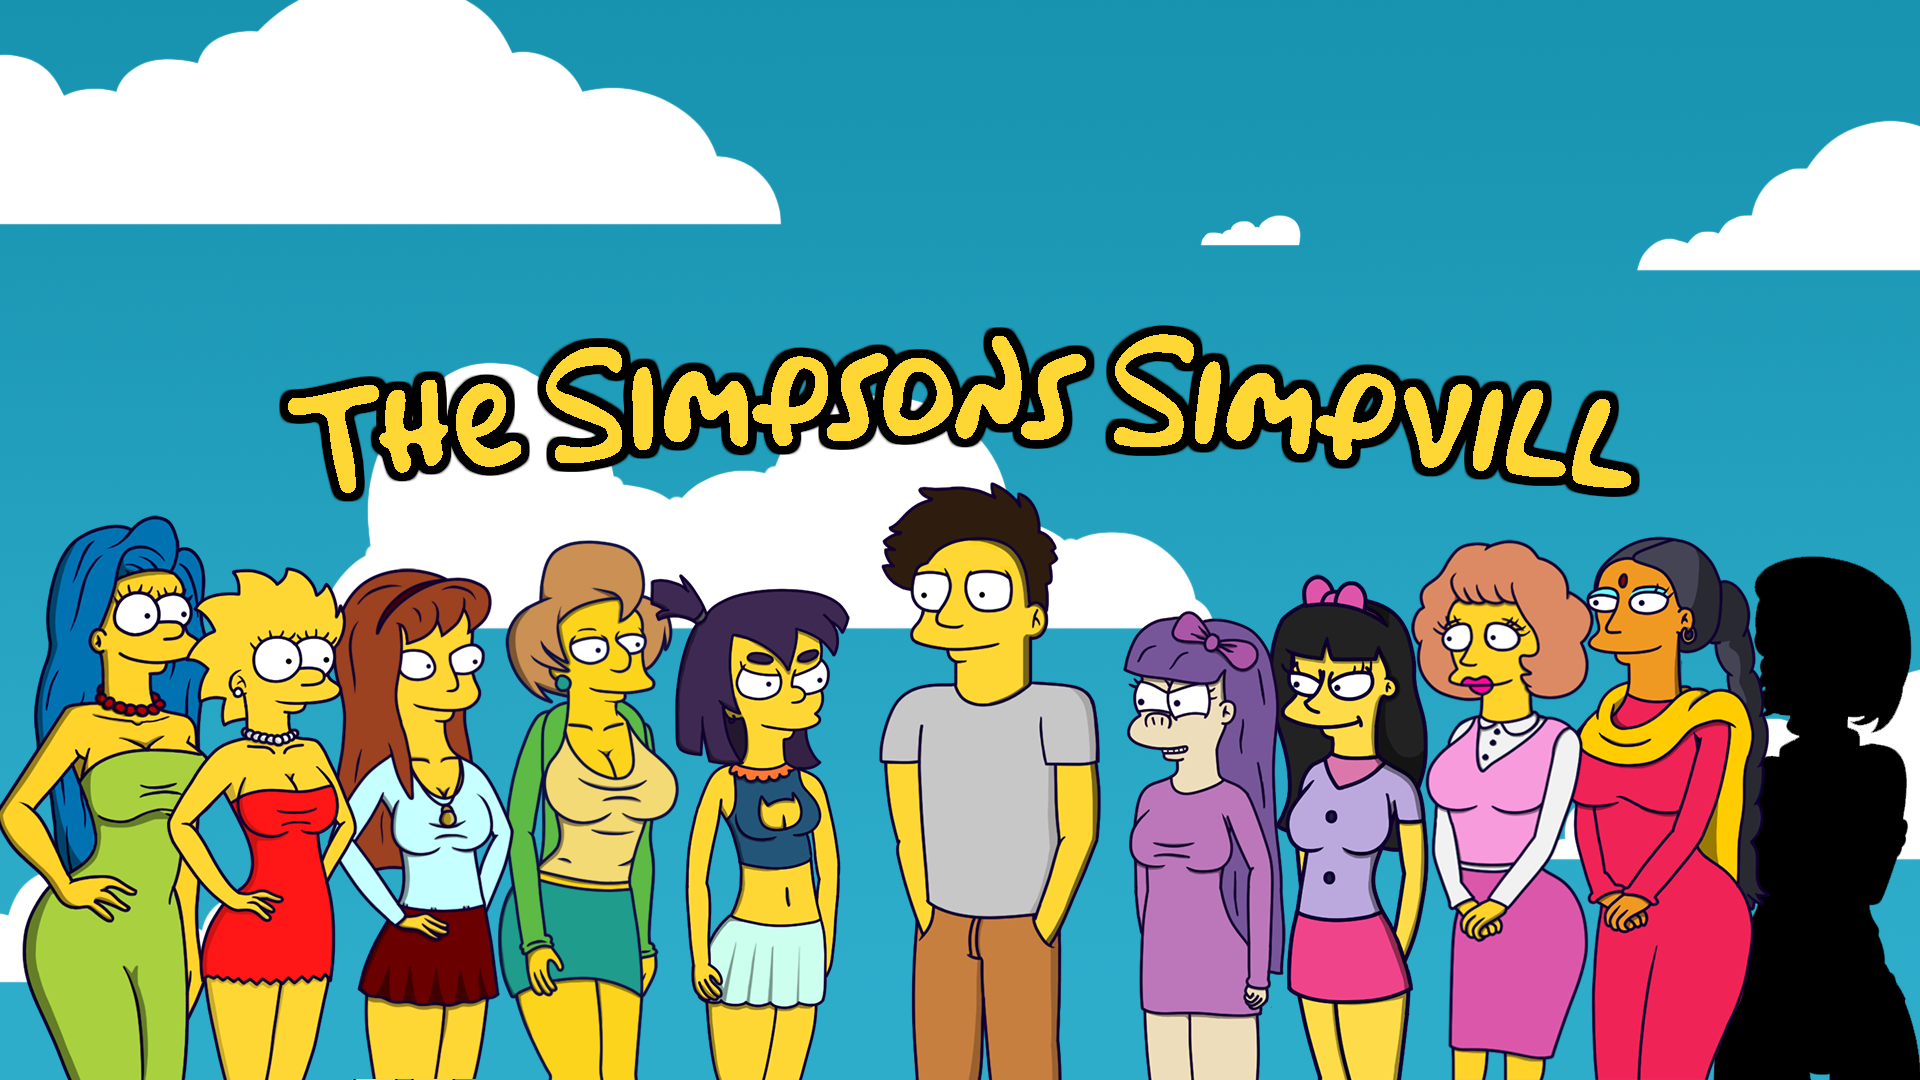 Simpsons porn game